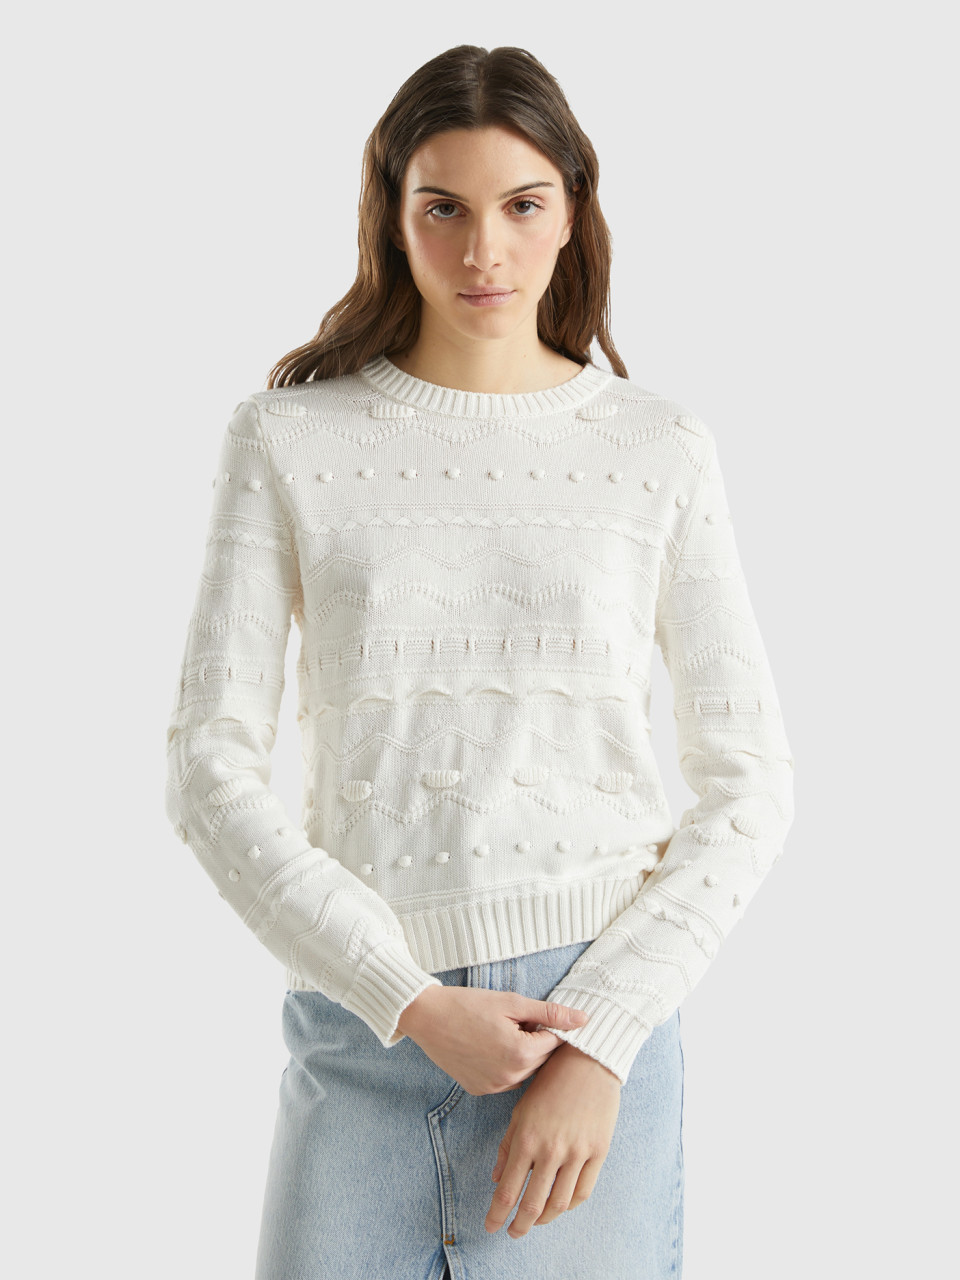 Benetton, Creamy White Knitted Sweater, Creamy White, Women